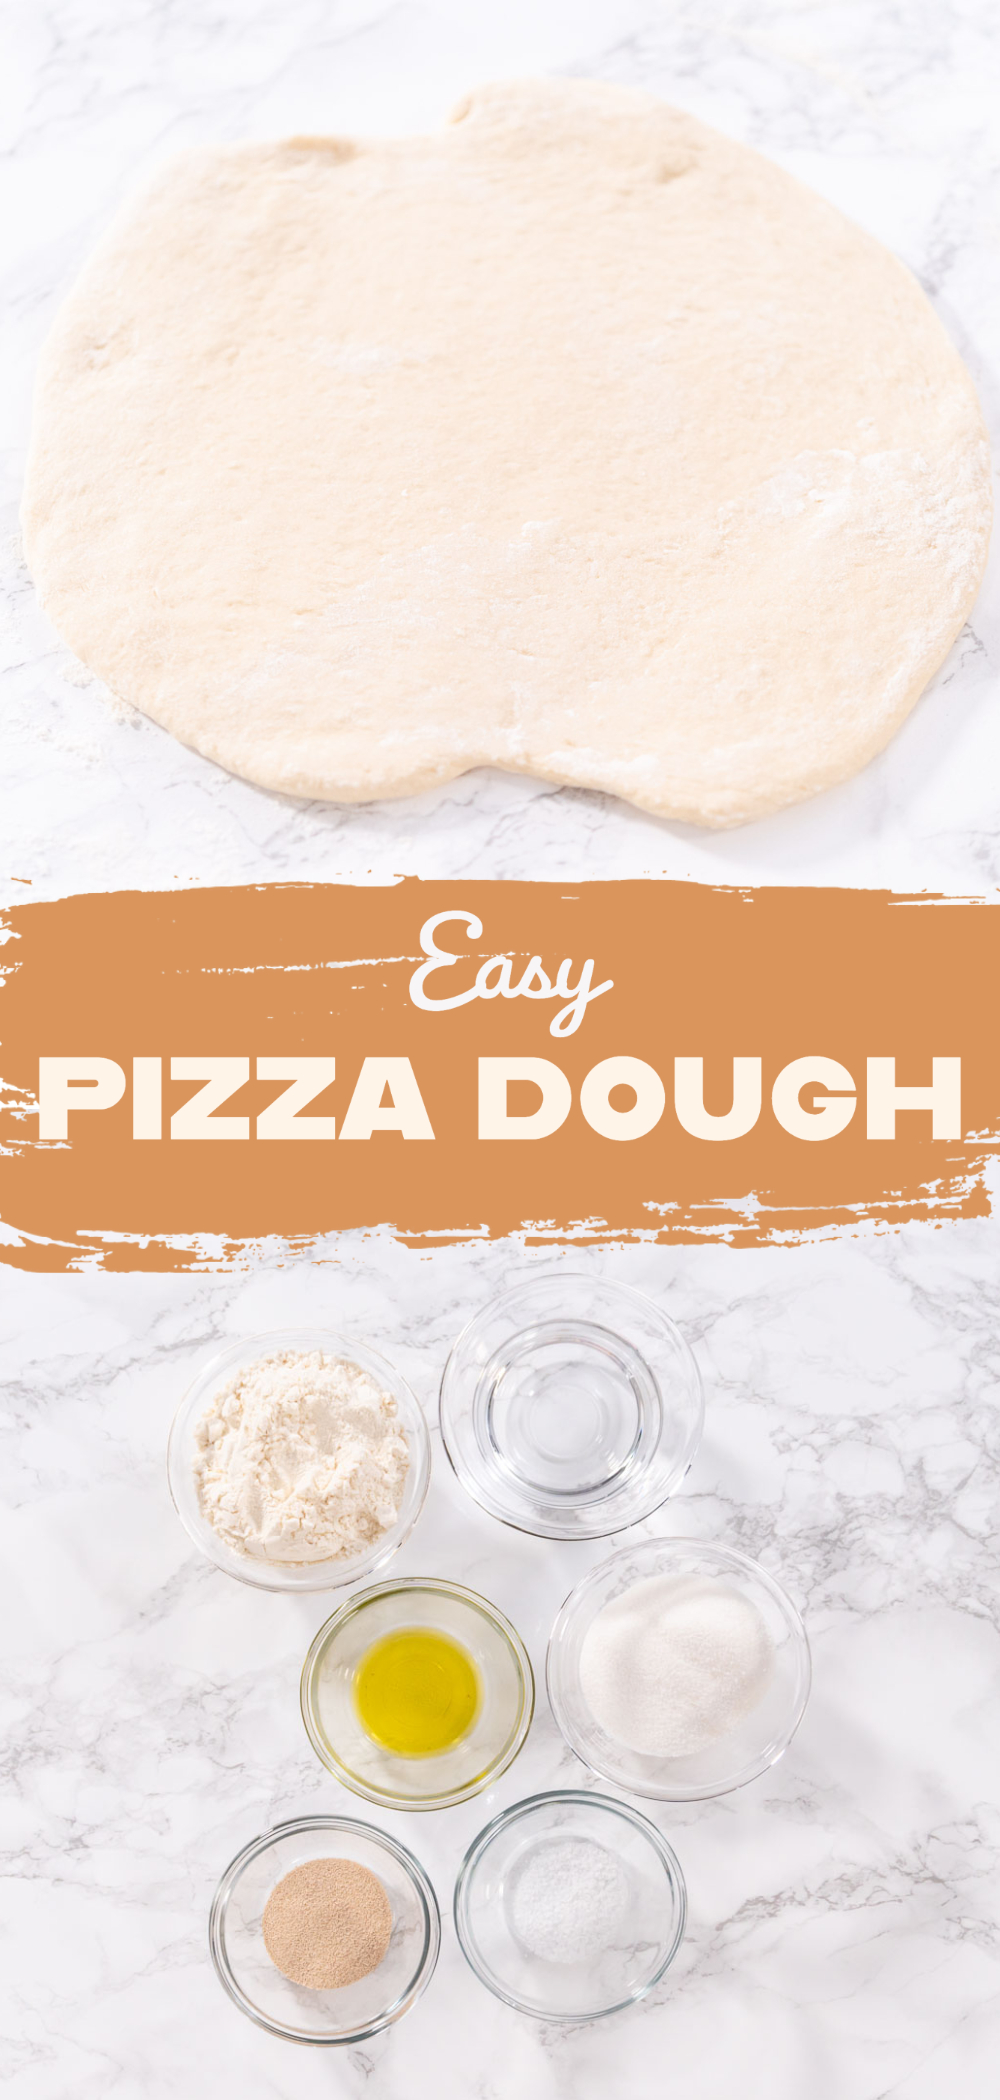 Easy pizza dough